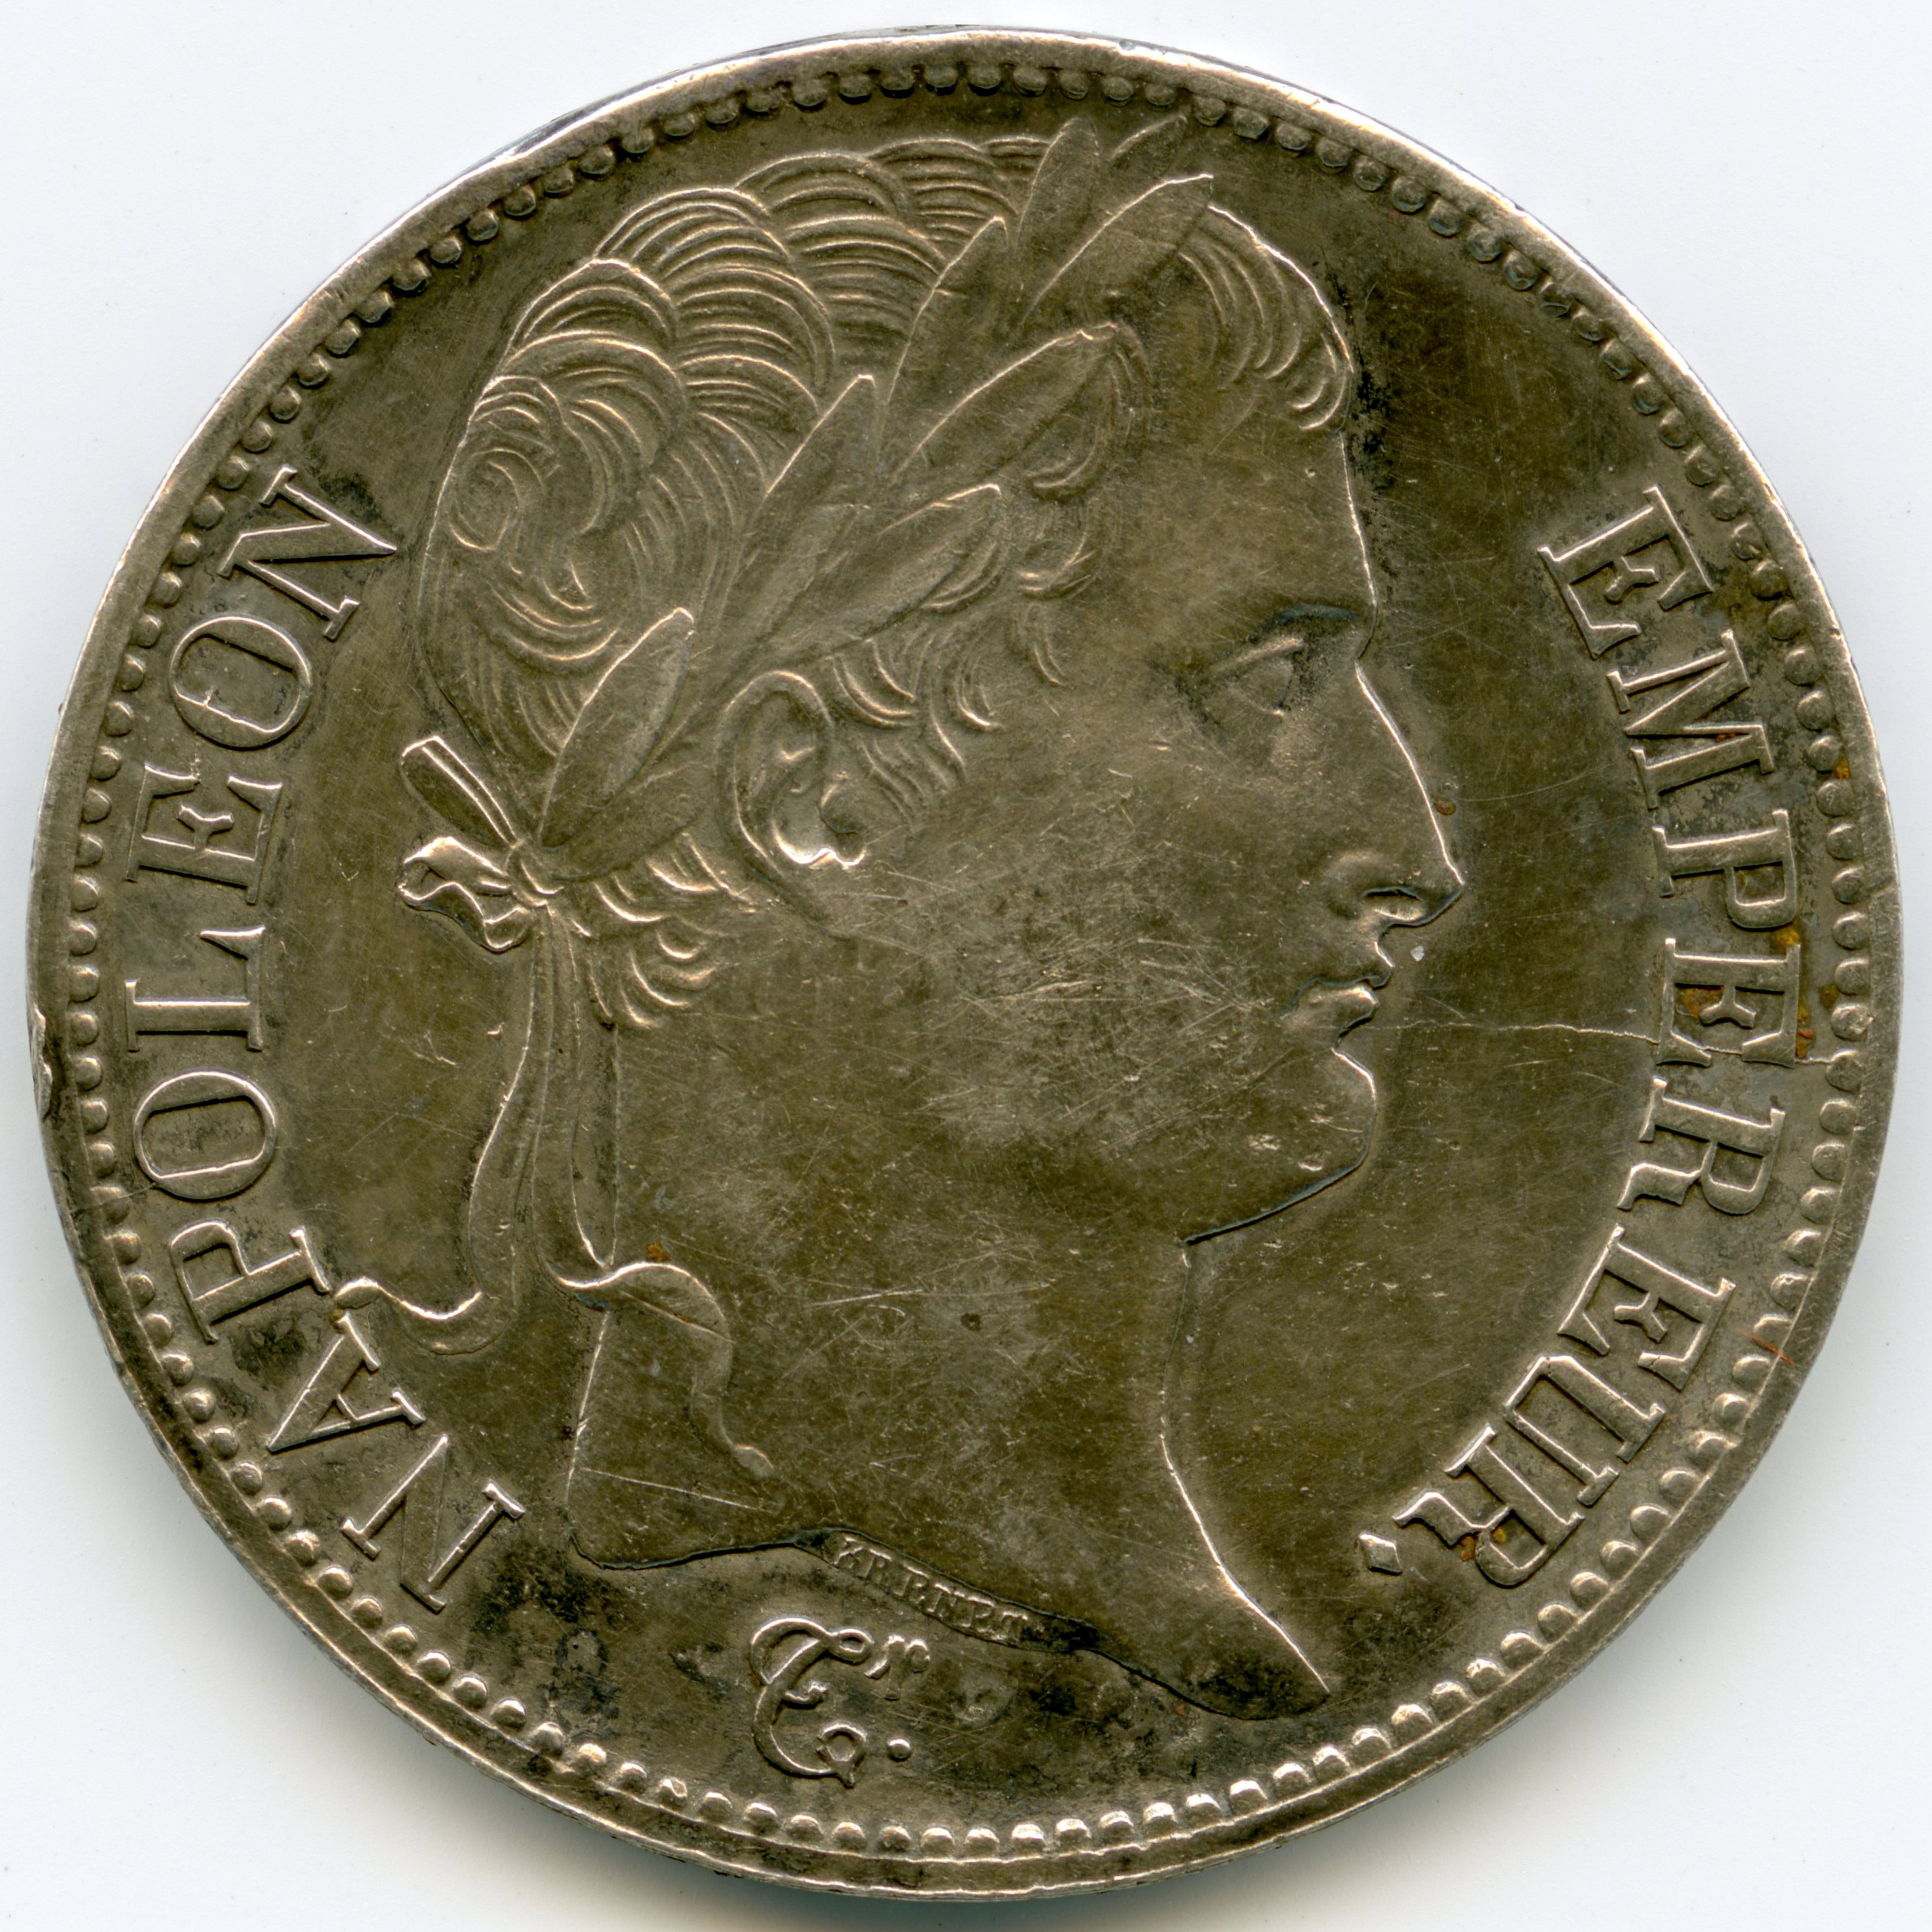 Napoléon Ier - 5 Francs - 1811 - Rouen avers